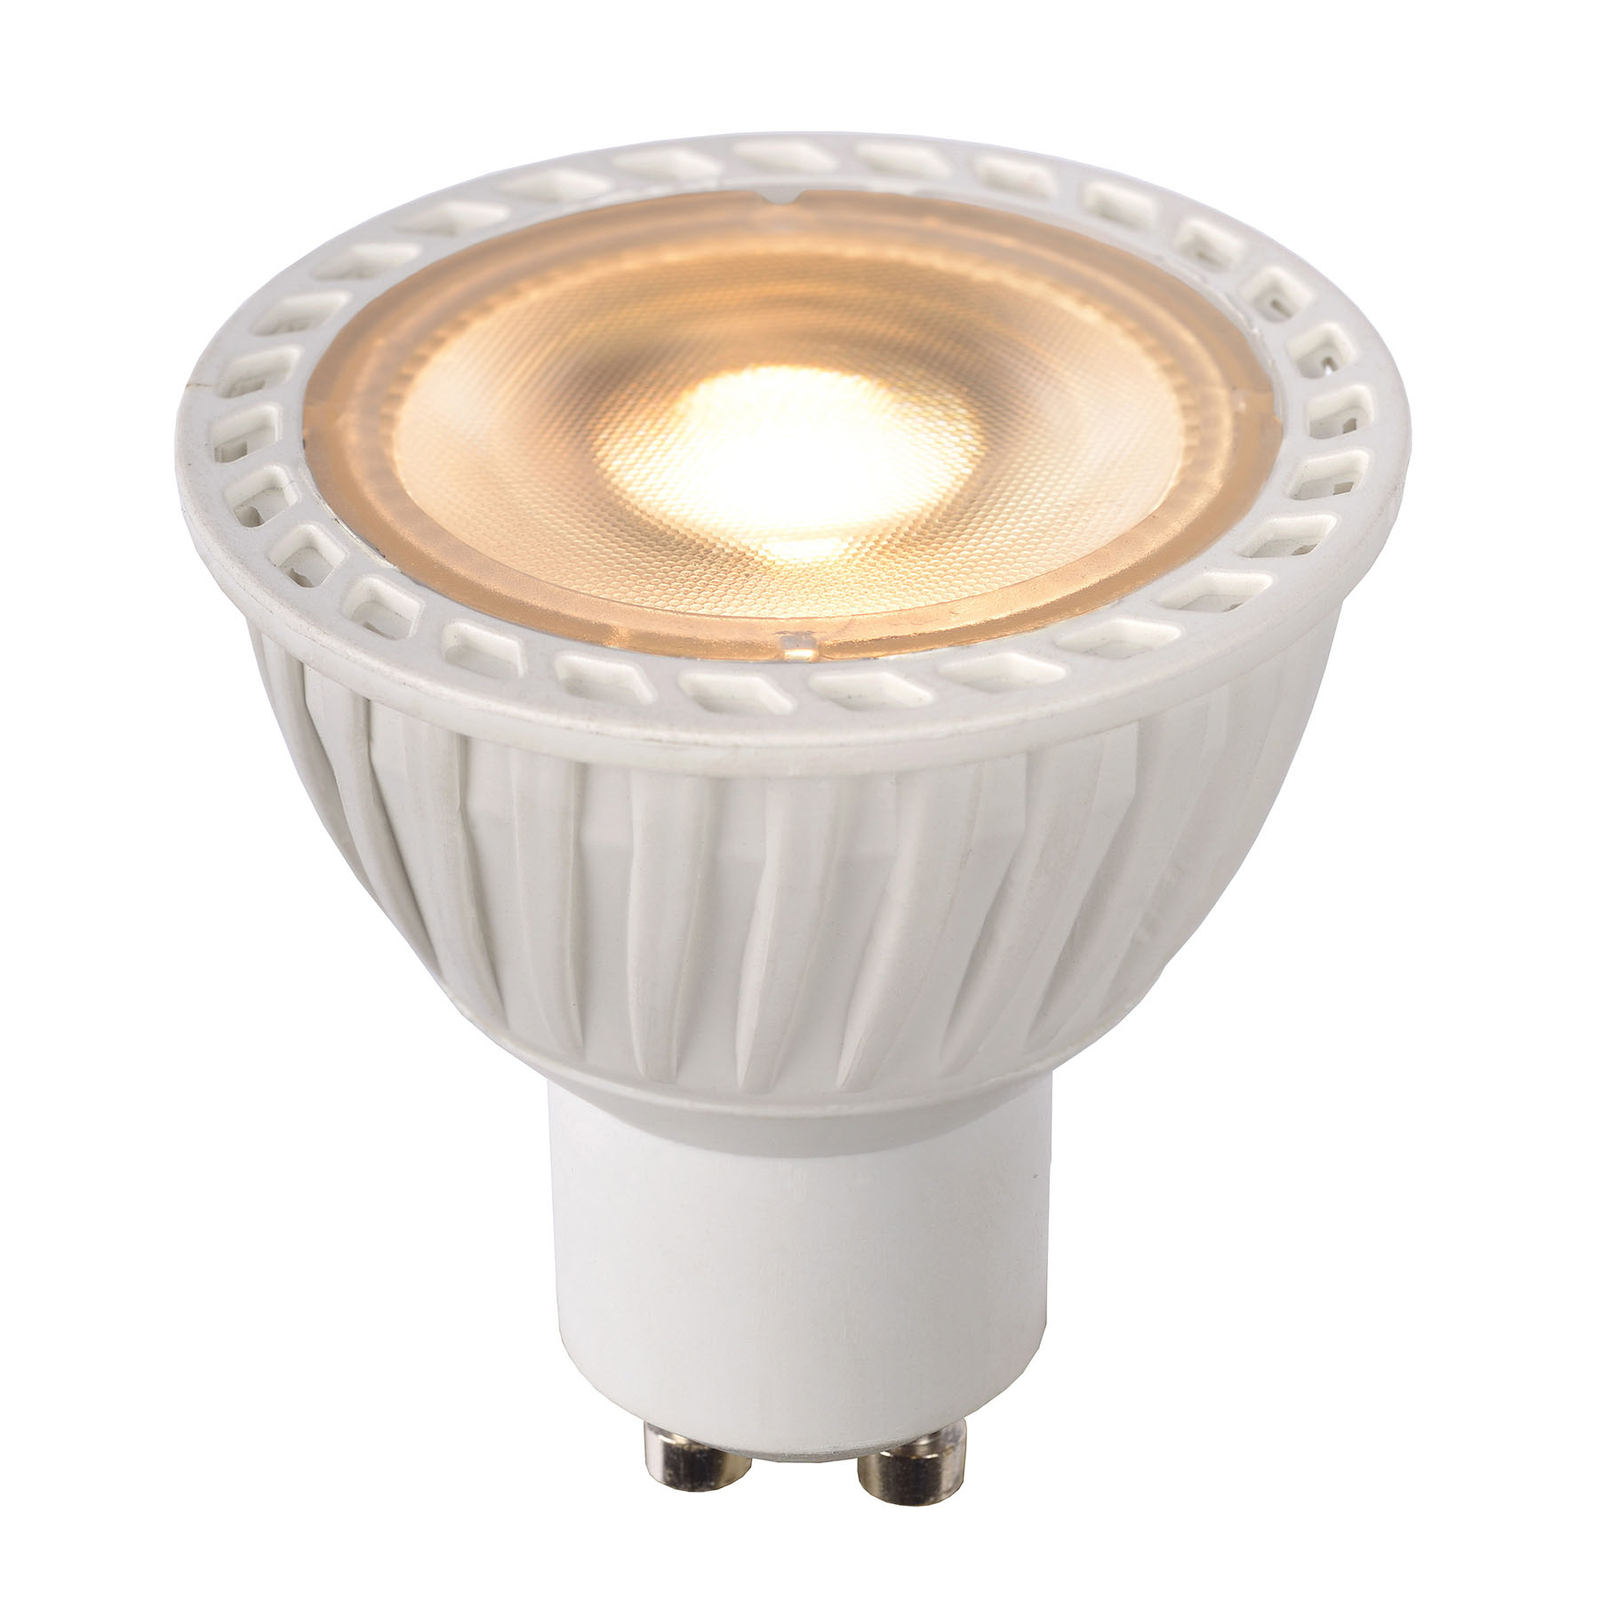 LED-Reflektor GU10 5W dim to warm, weiß